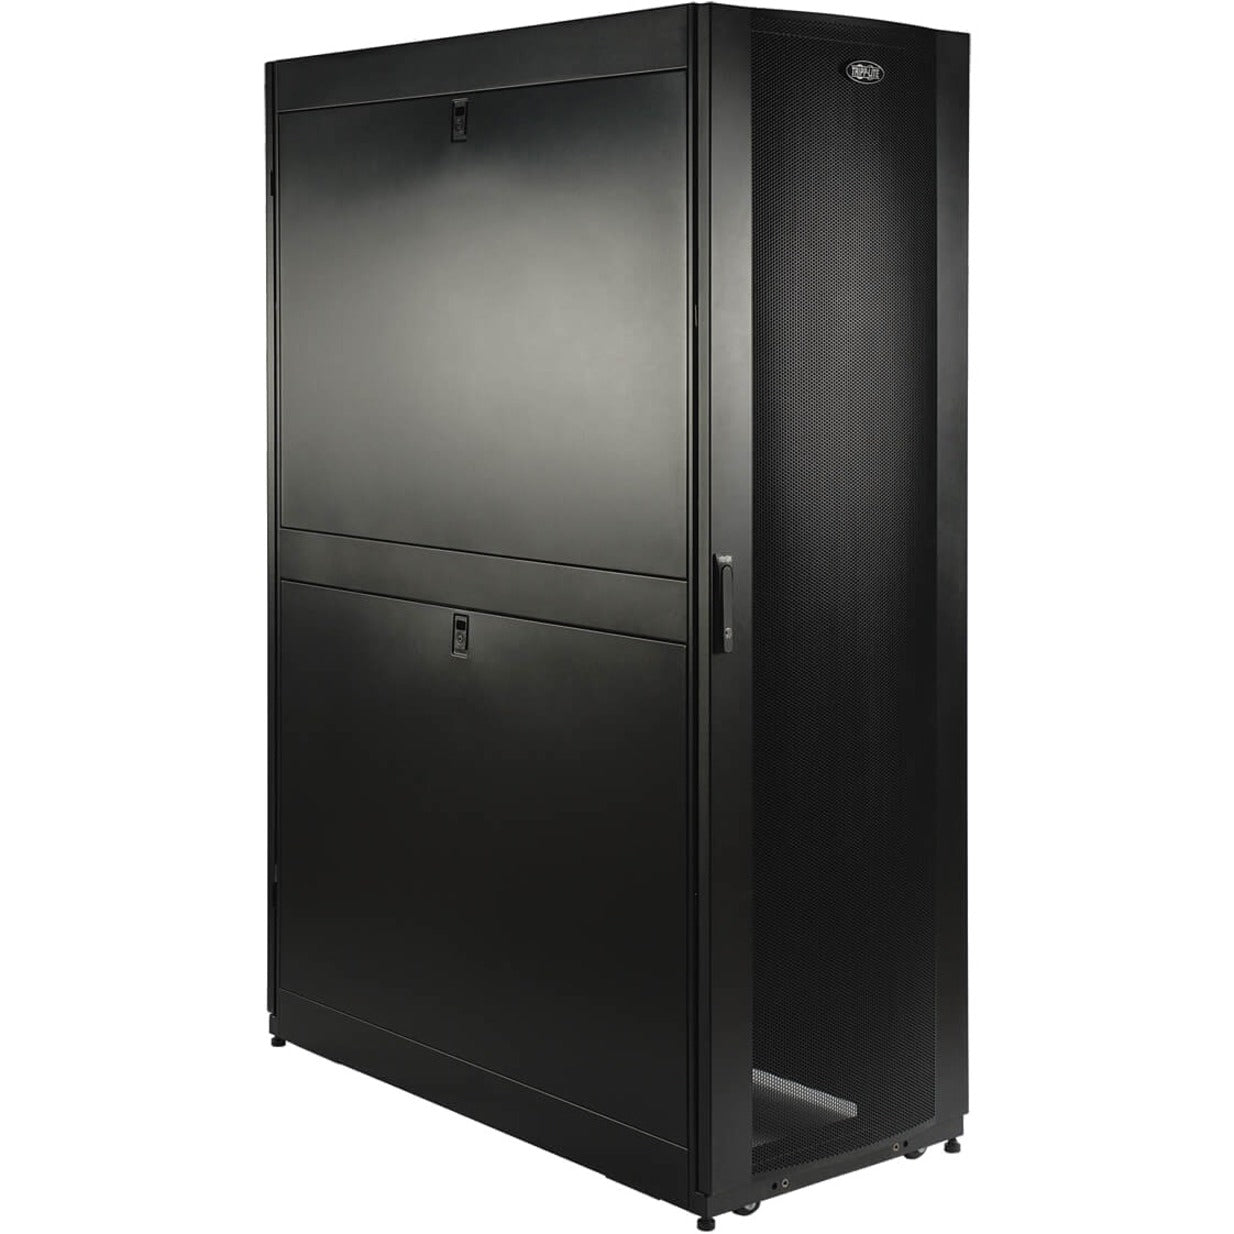 Tripp Lite SR45UBDP 45U SmartRack Deep Premium Enclosure, Includes Doors and Side Panels